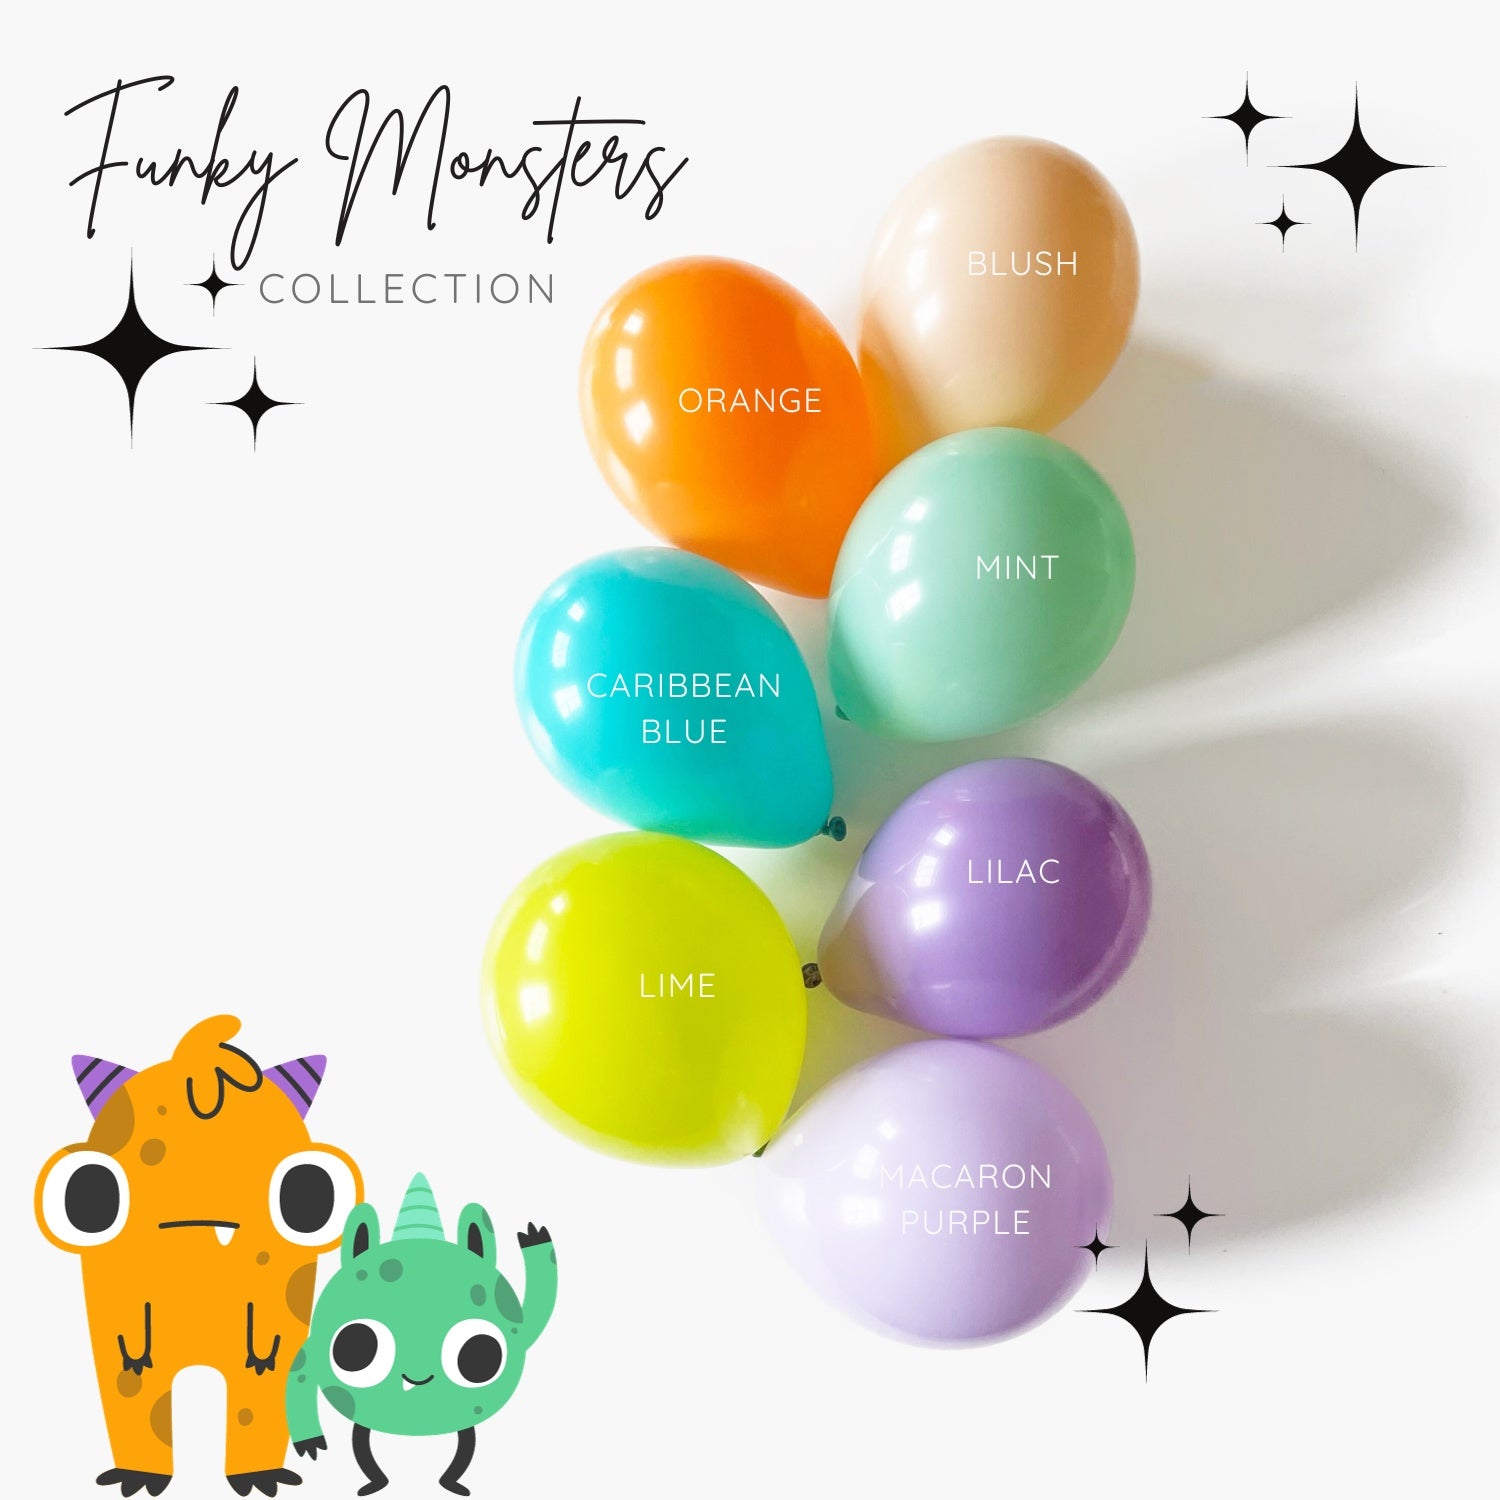 Funky Monsters Balloon Kit - Halloween Fun Kids Party Balloon Garland & Balloon Bouquet Decorations